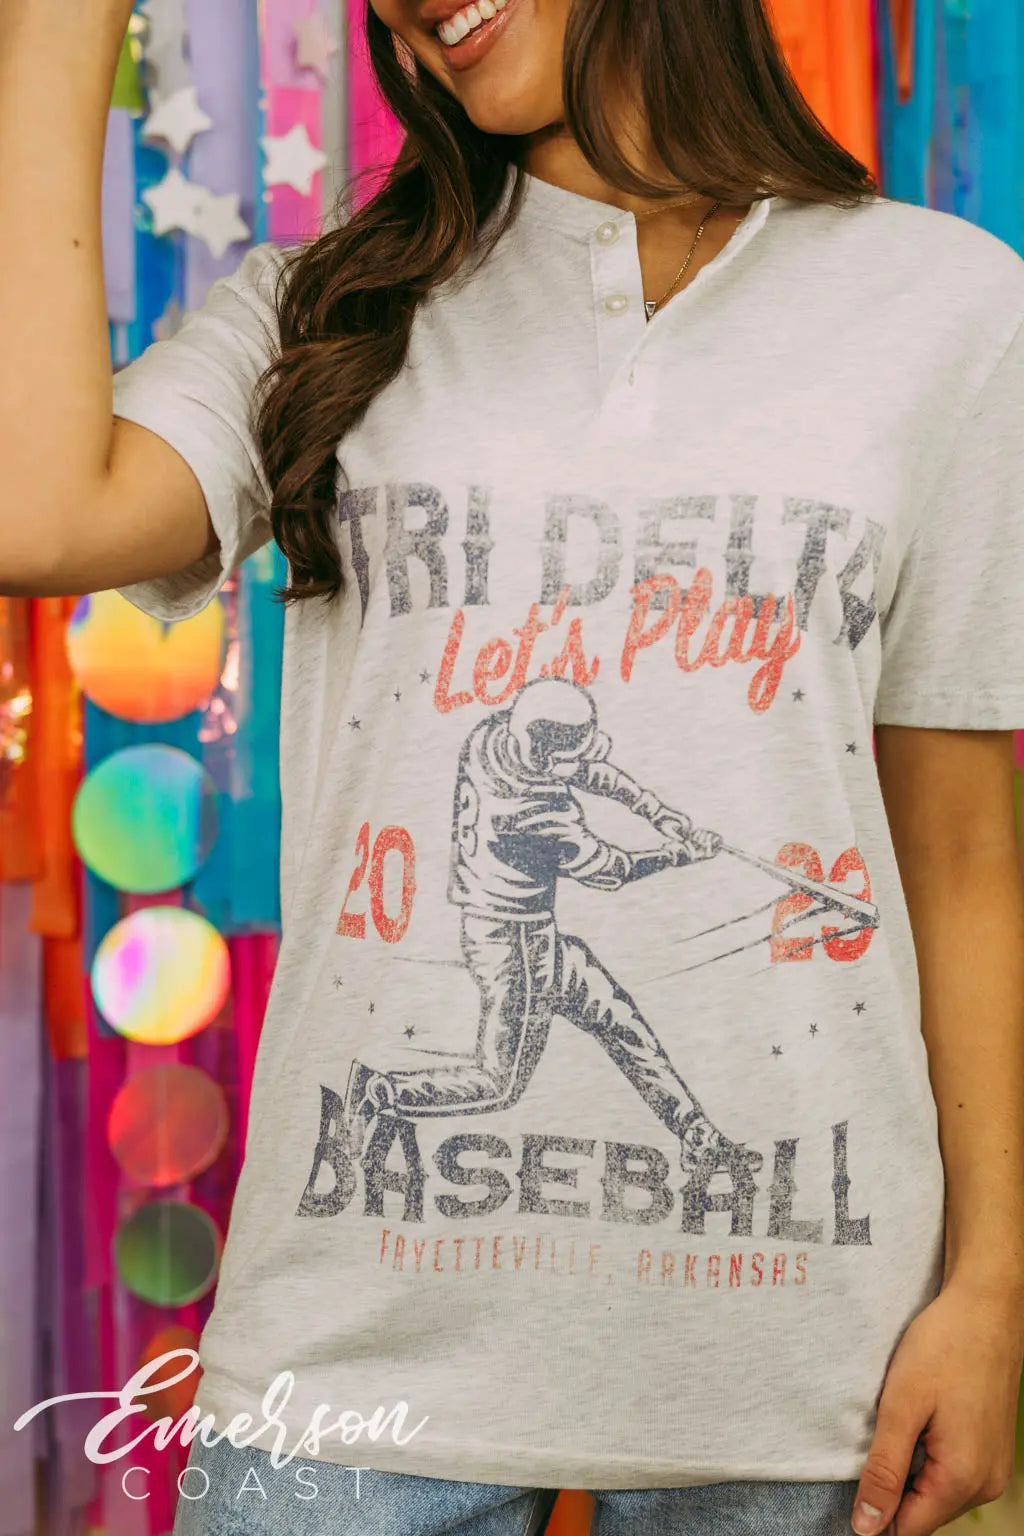 baseball team shirts